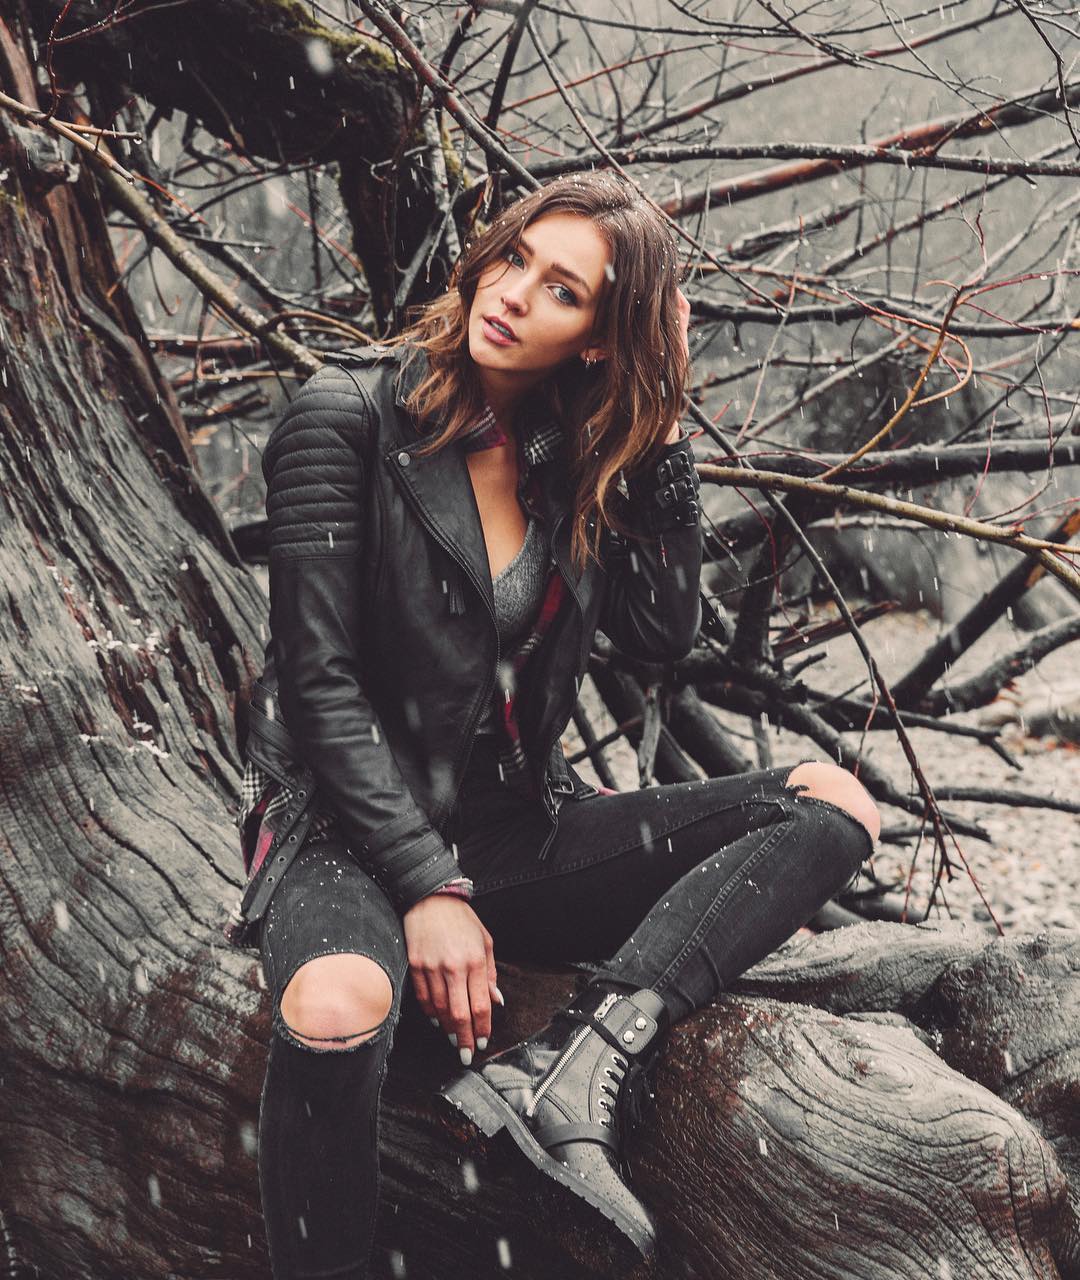 Model Women Celebrity Leather Jackets Jacket Black Boots 1080x1280